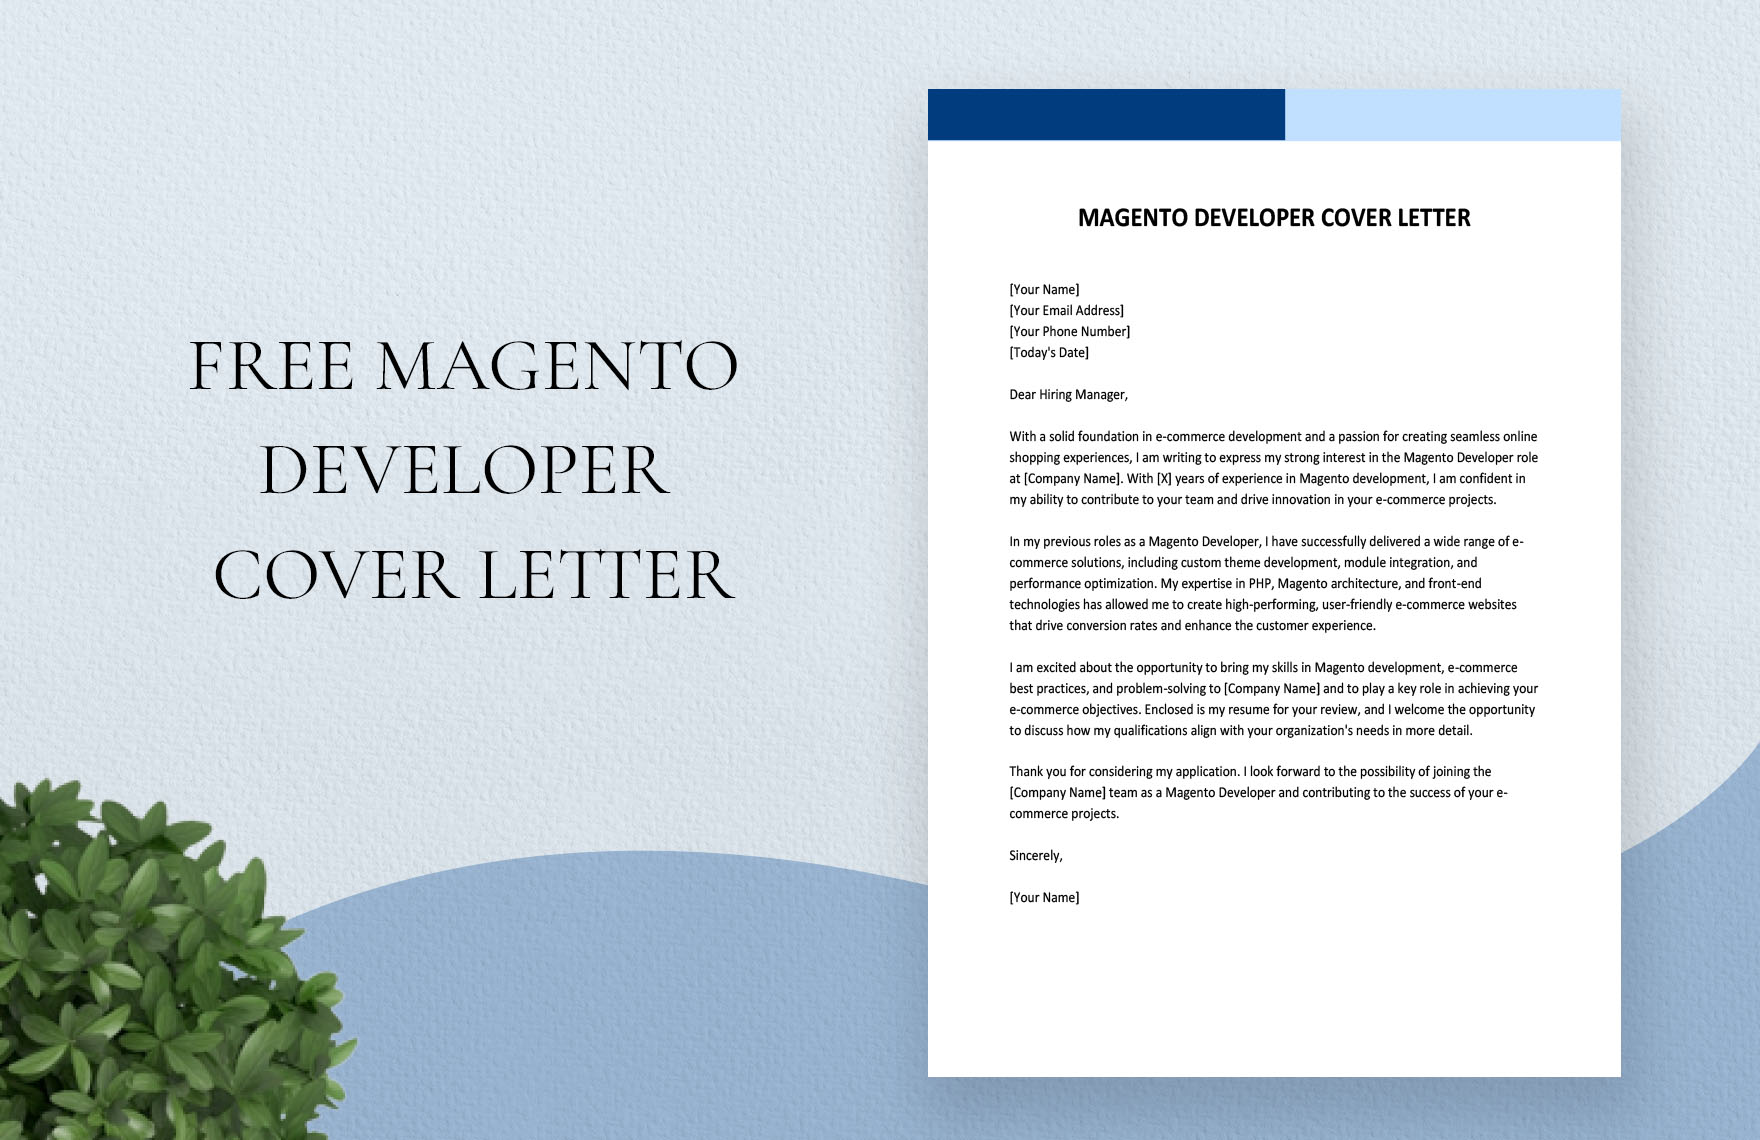 Magento Developer Cover Letter in Word, Google Docs